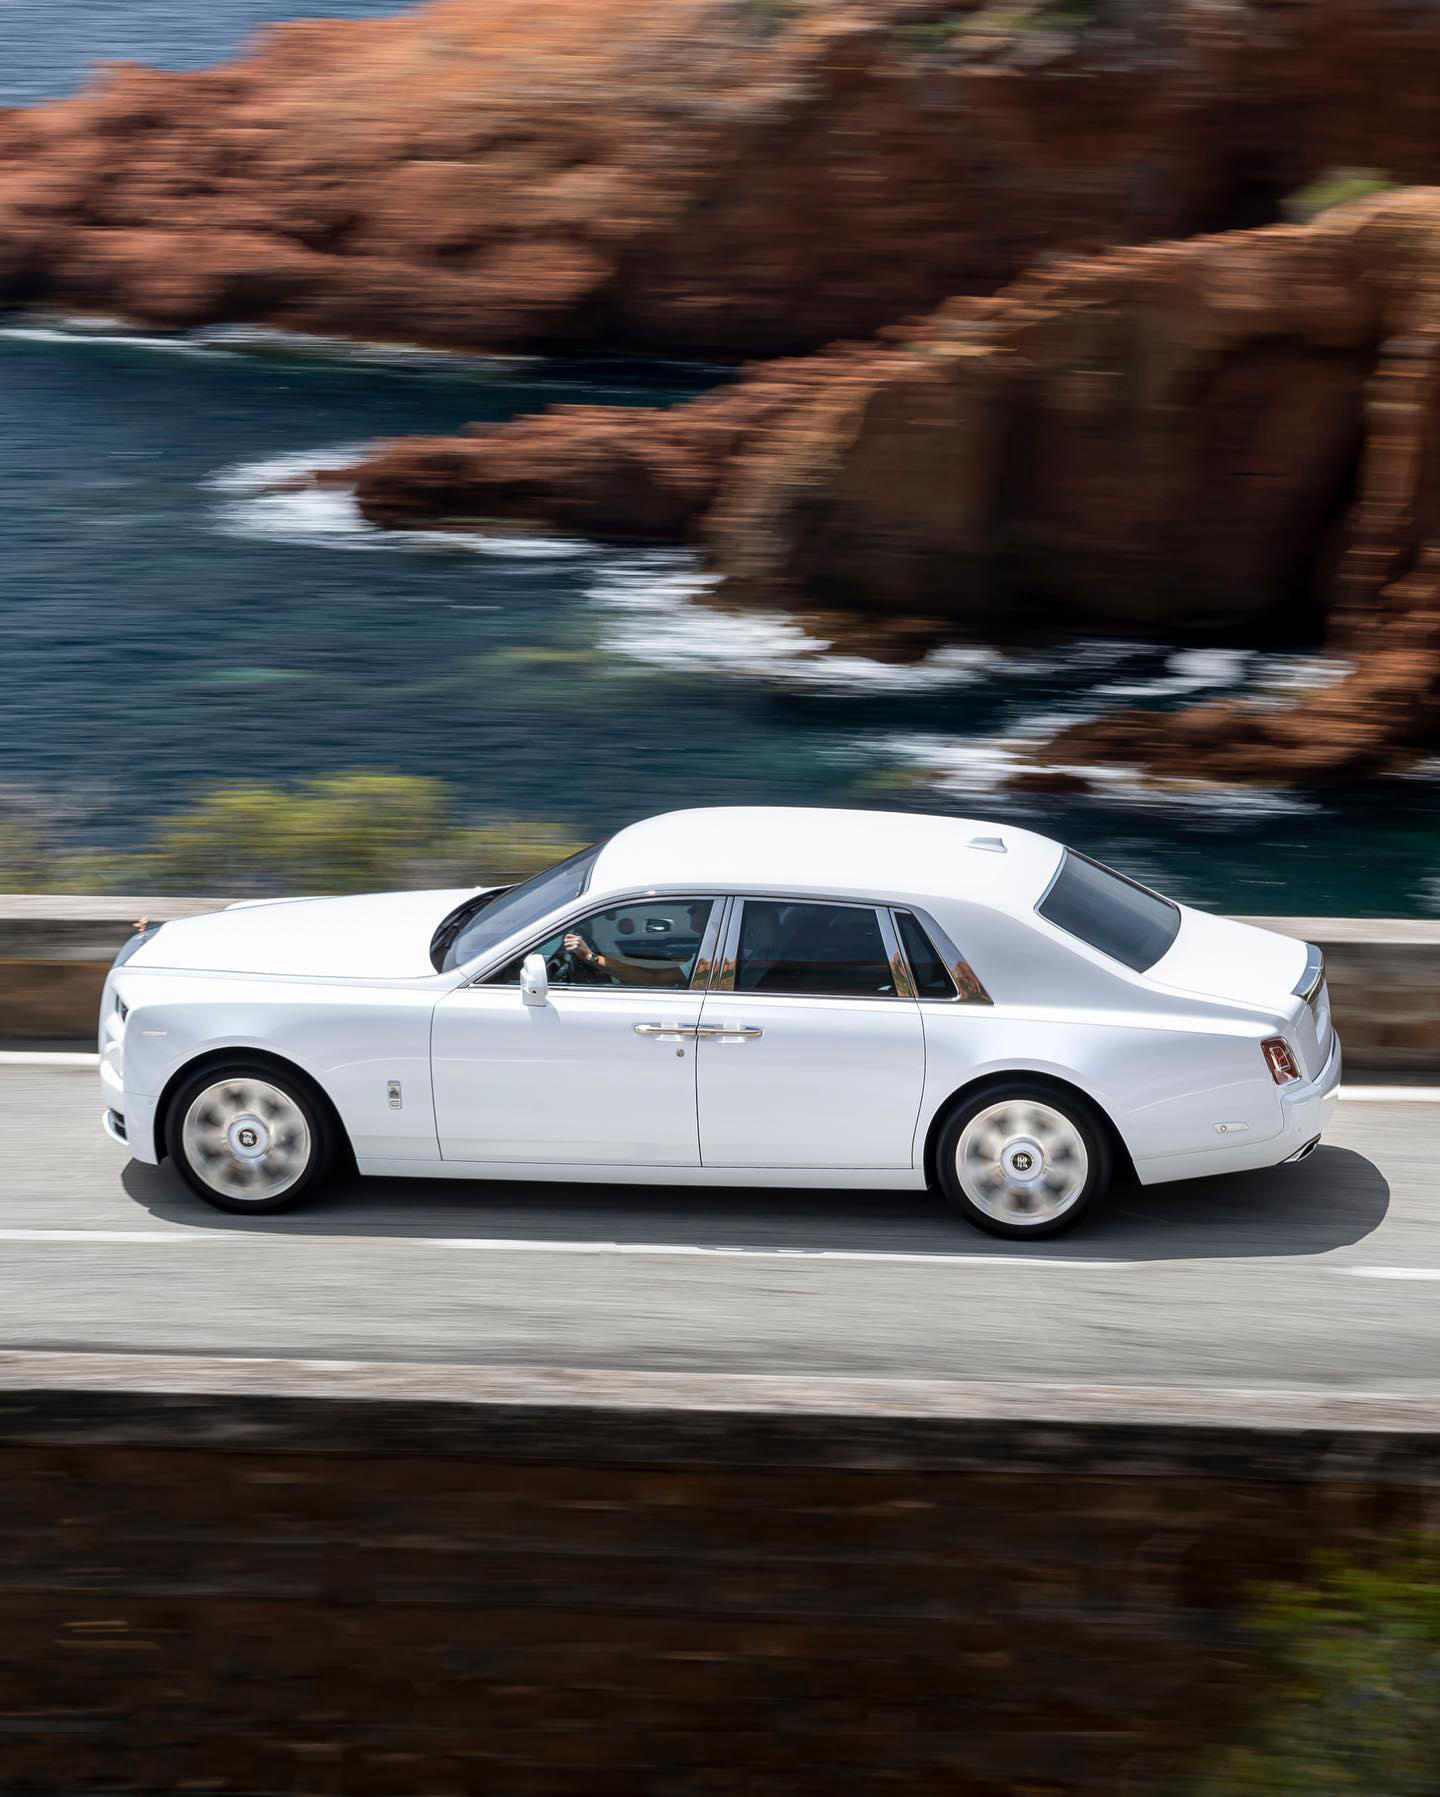 Rolls-Royce Motor Cars - Projecting elegance and authority, Phantom Series II’s Arctic White exterio